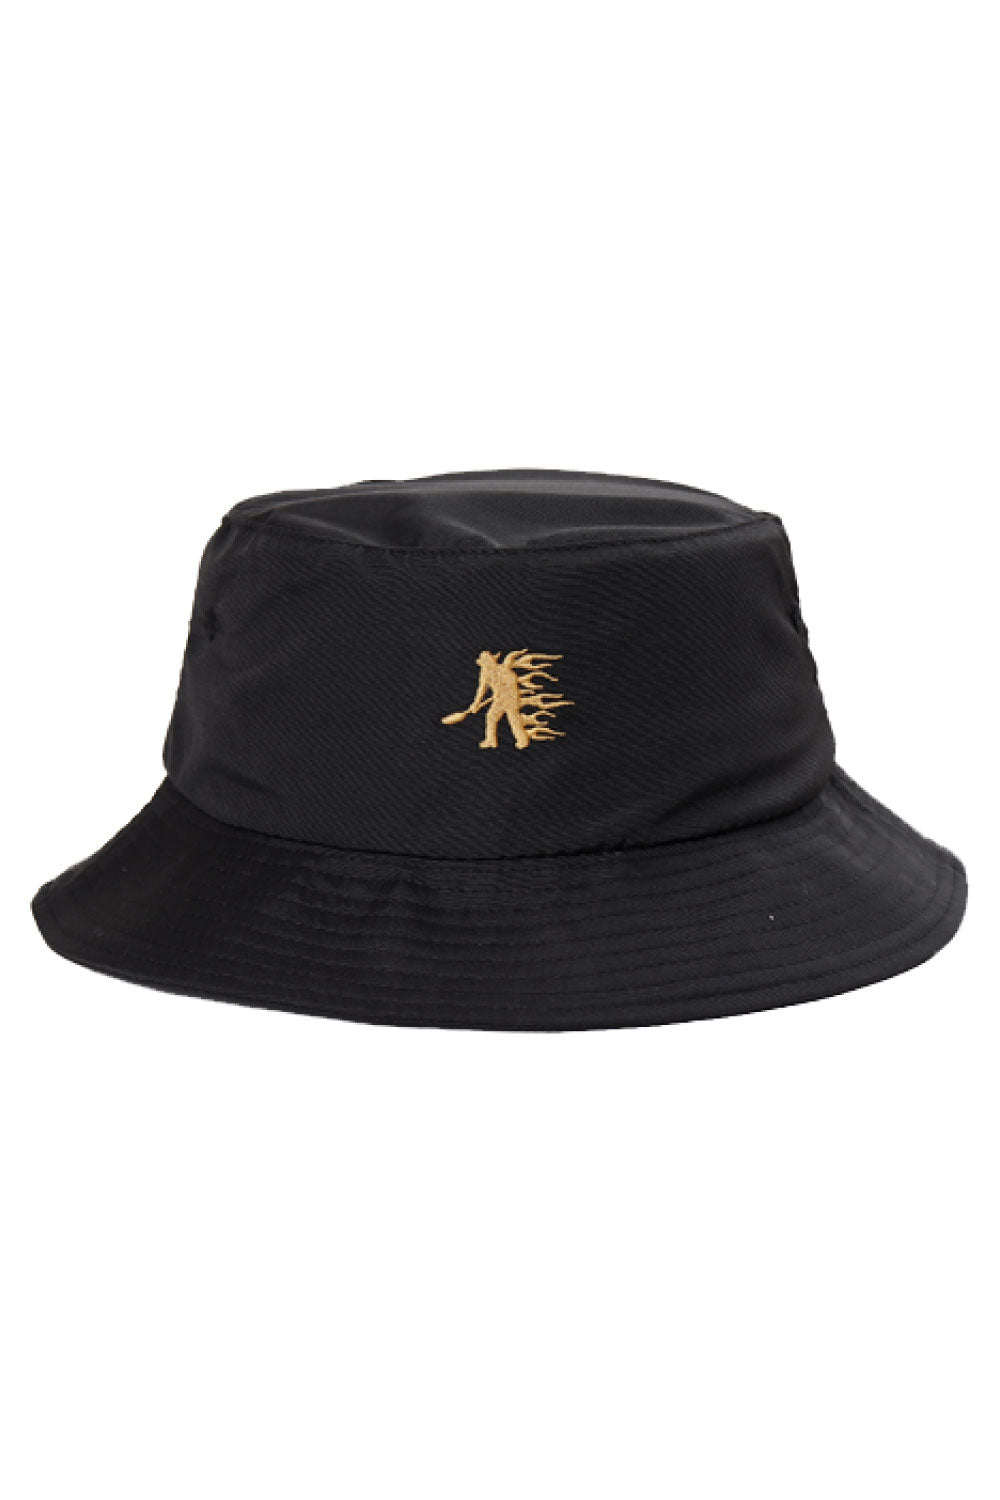 Pass Port X Drag Bucket Hat